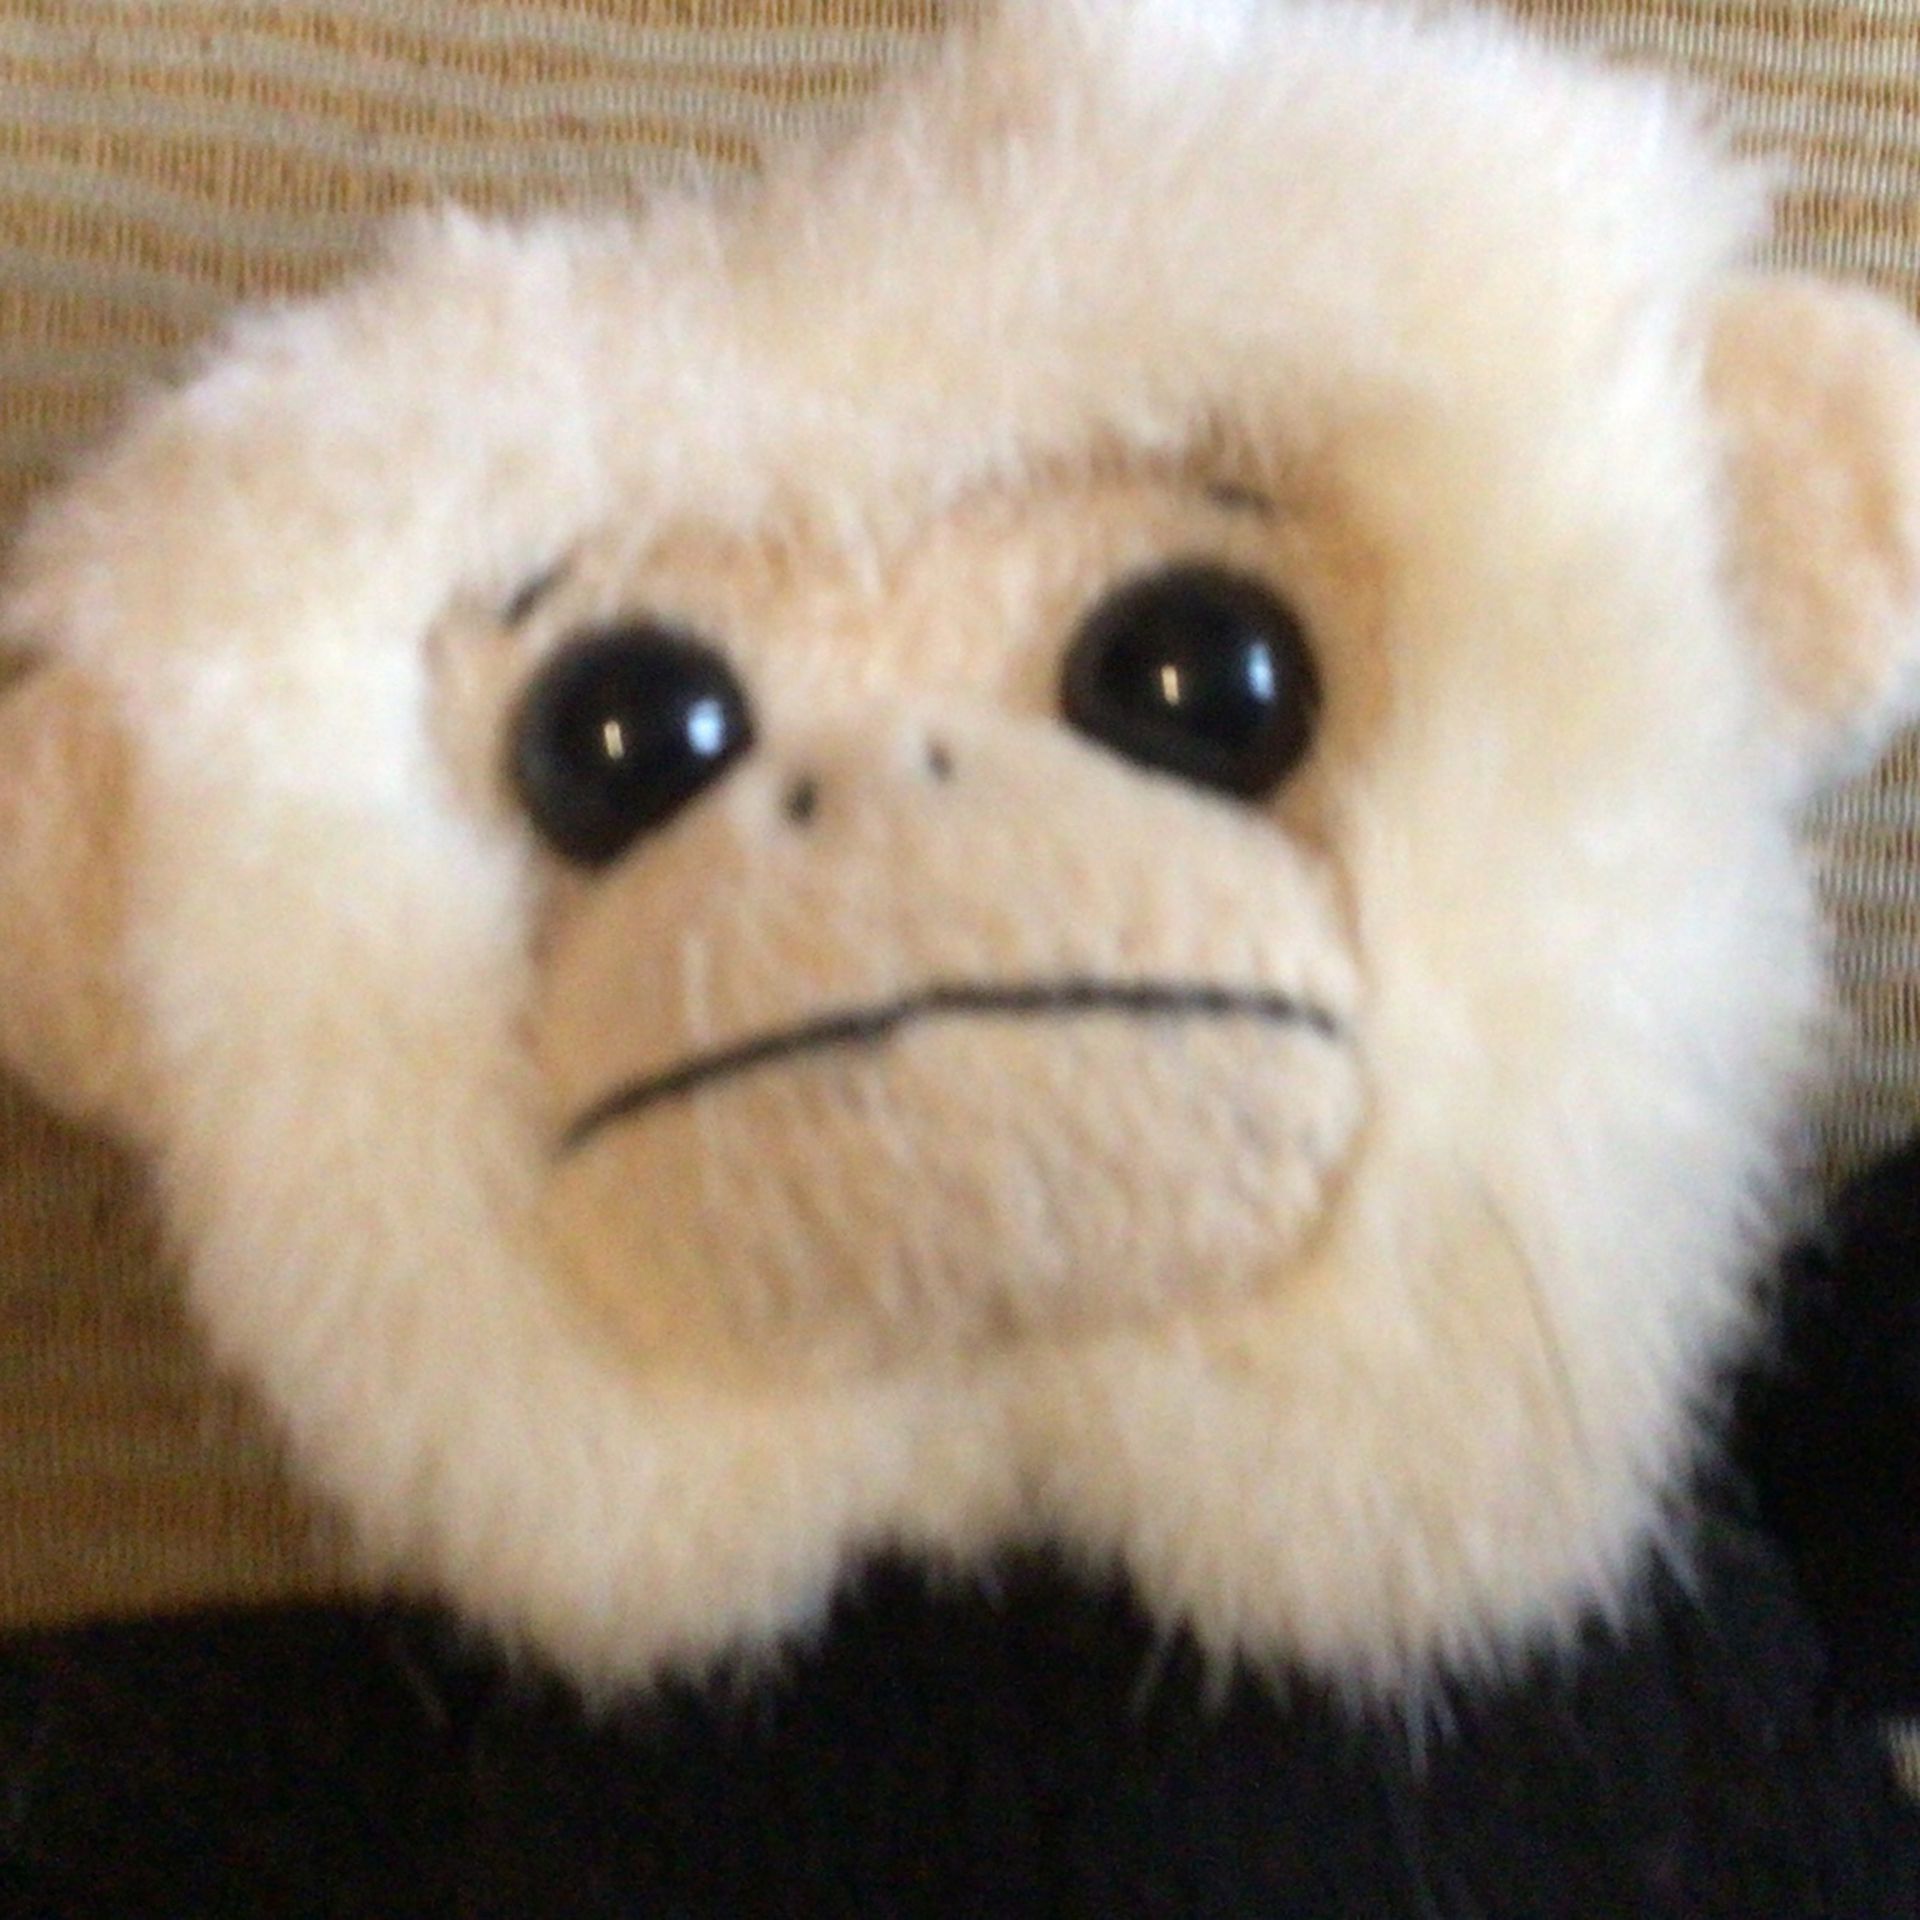 Monkey Stuffie